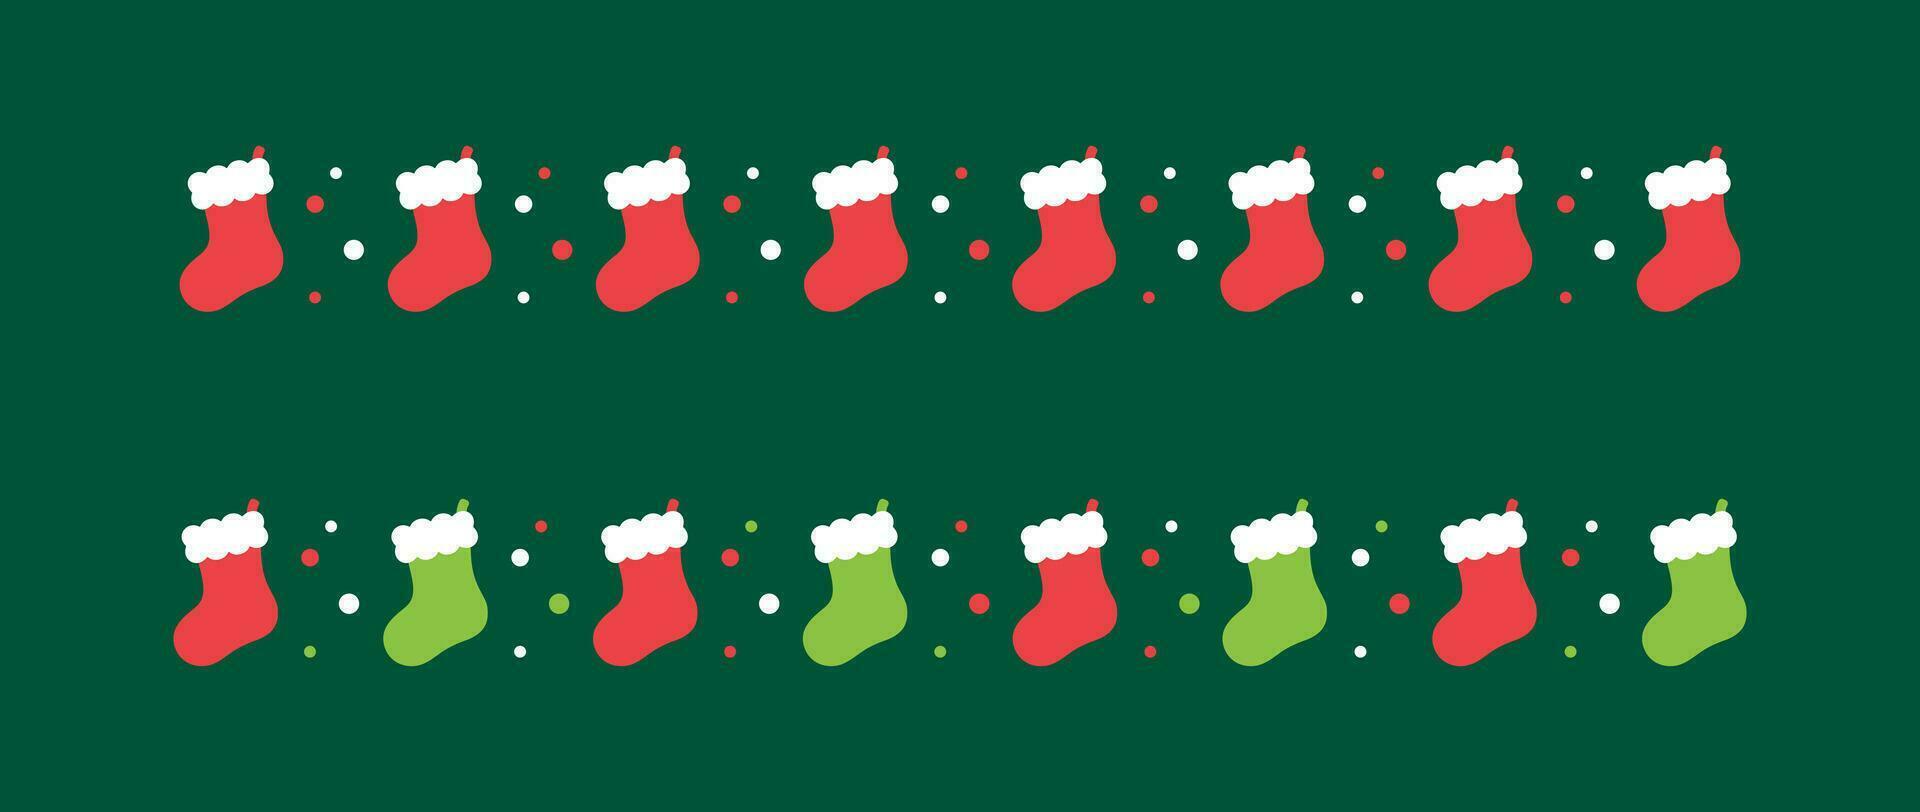 Christmas stocking pattern decorative border and text divider set. Simple Minimal Vector Illustration.